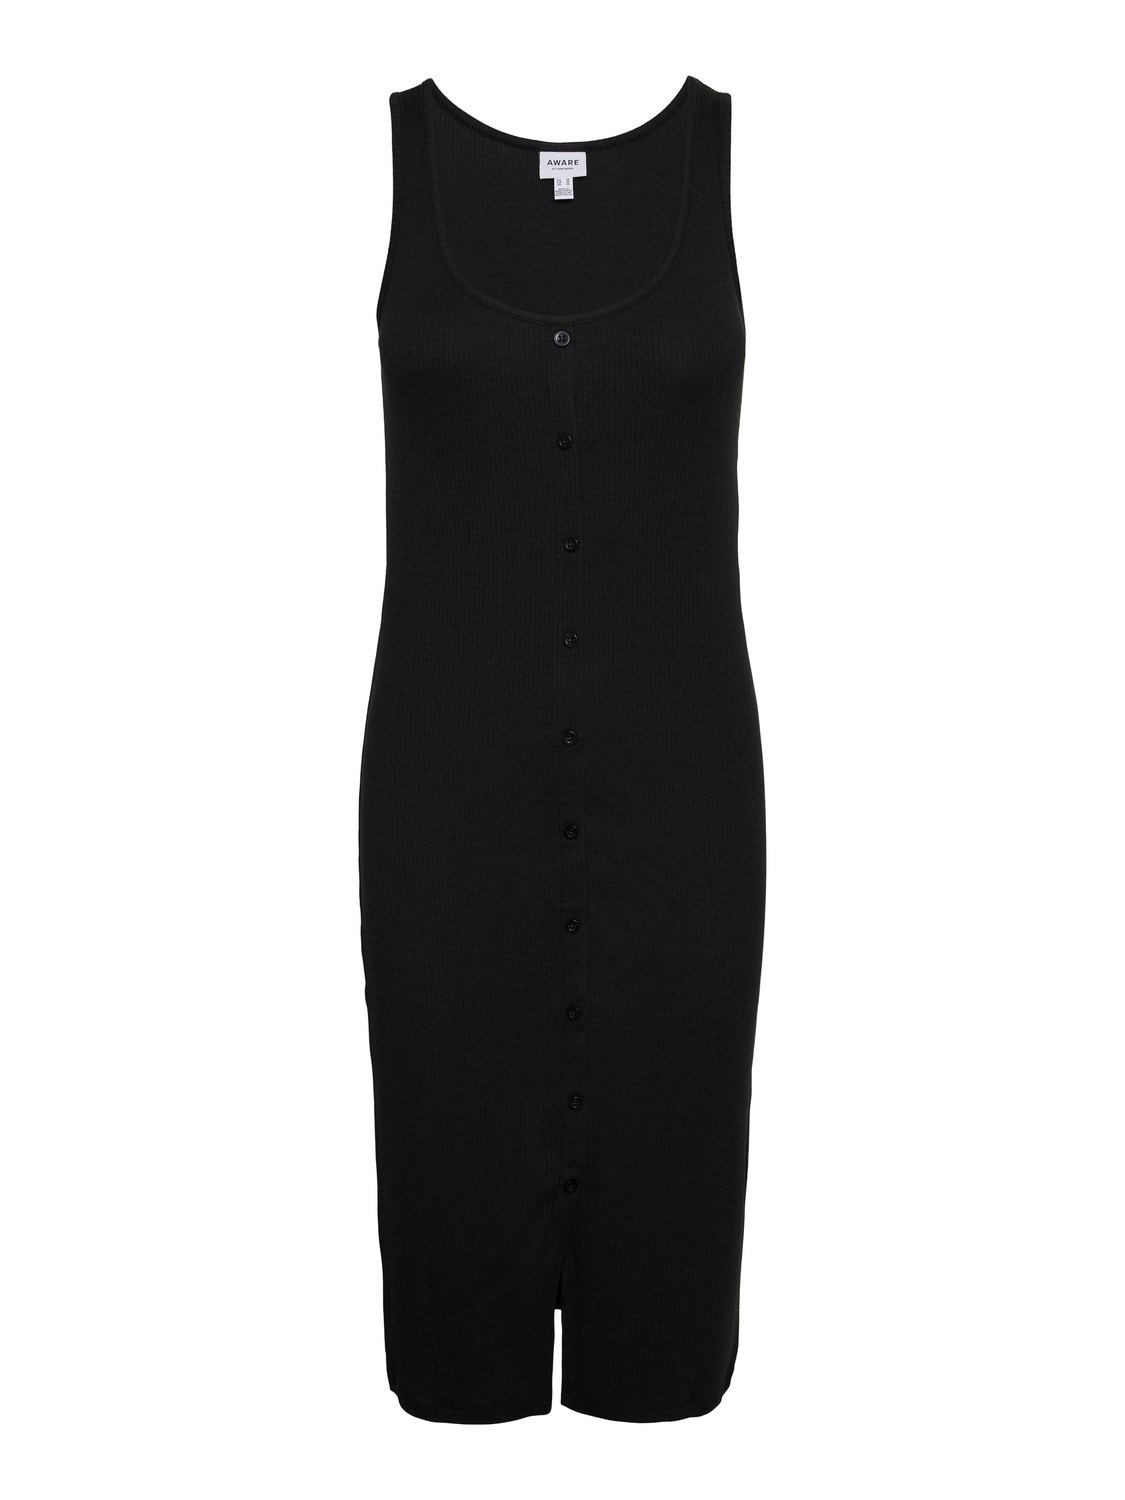 Vero Moda VMFLORENTINA Midi dress -Black - 10290343